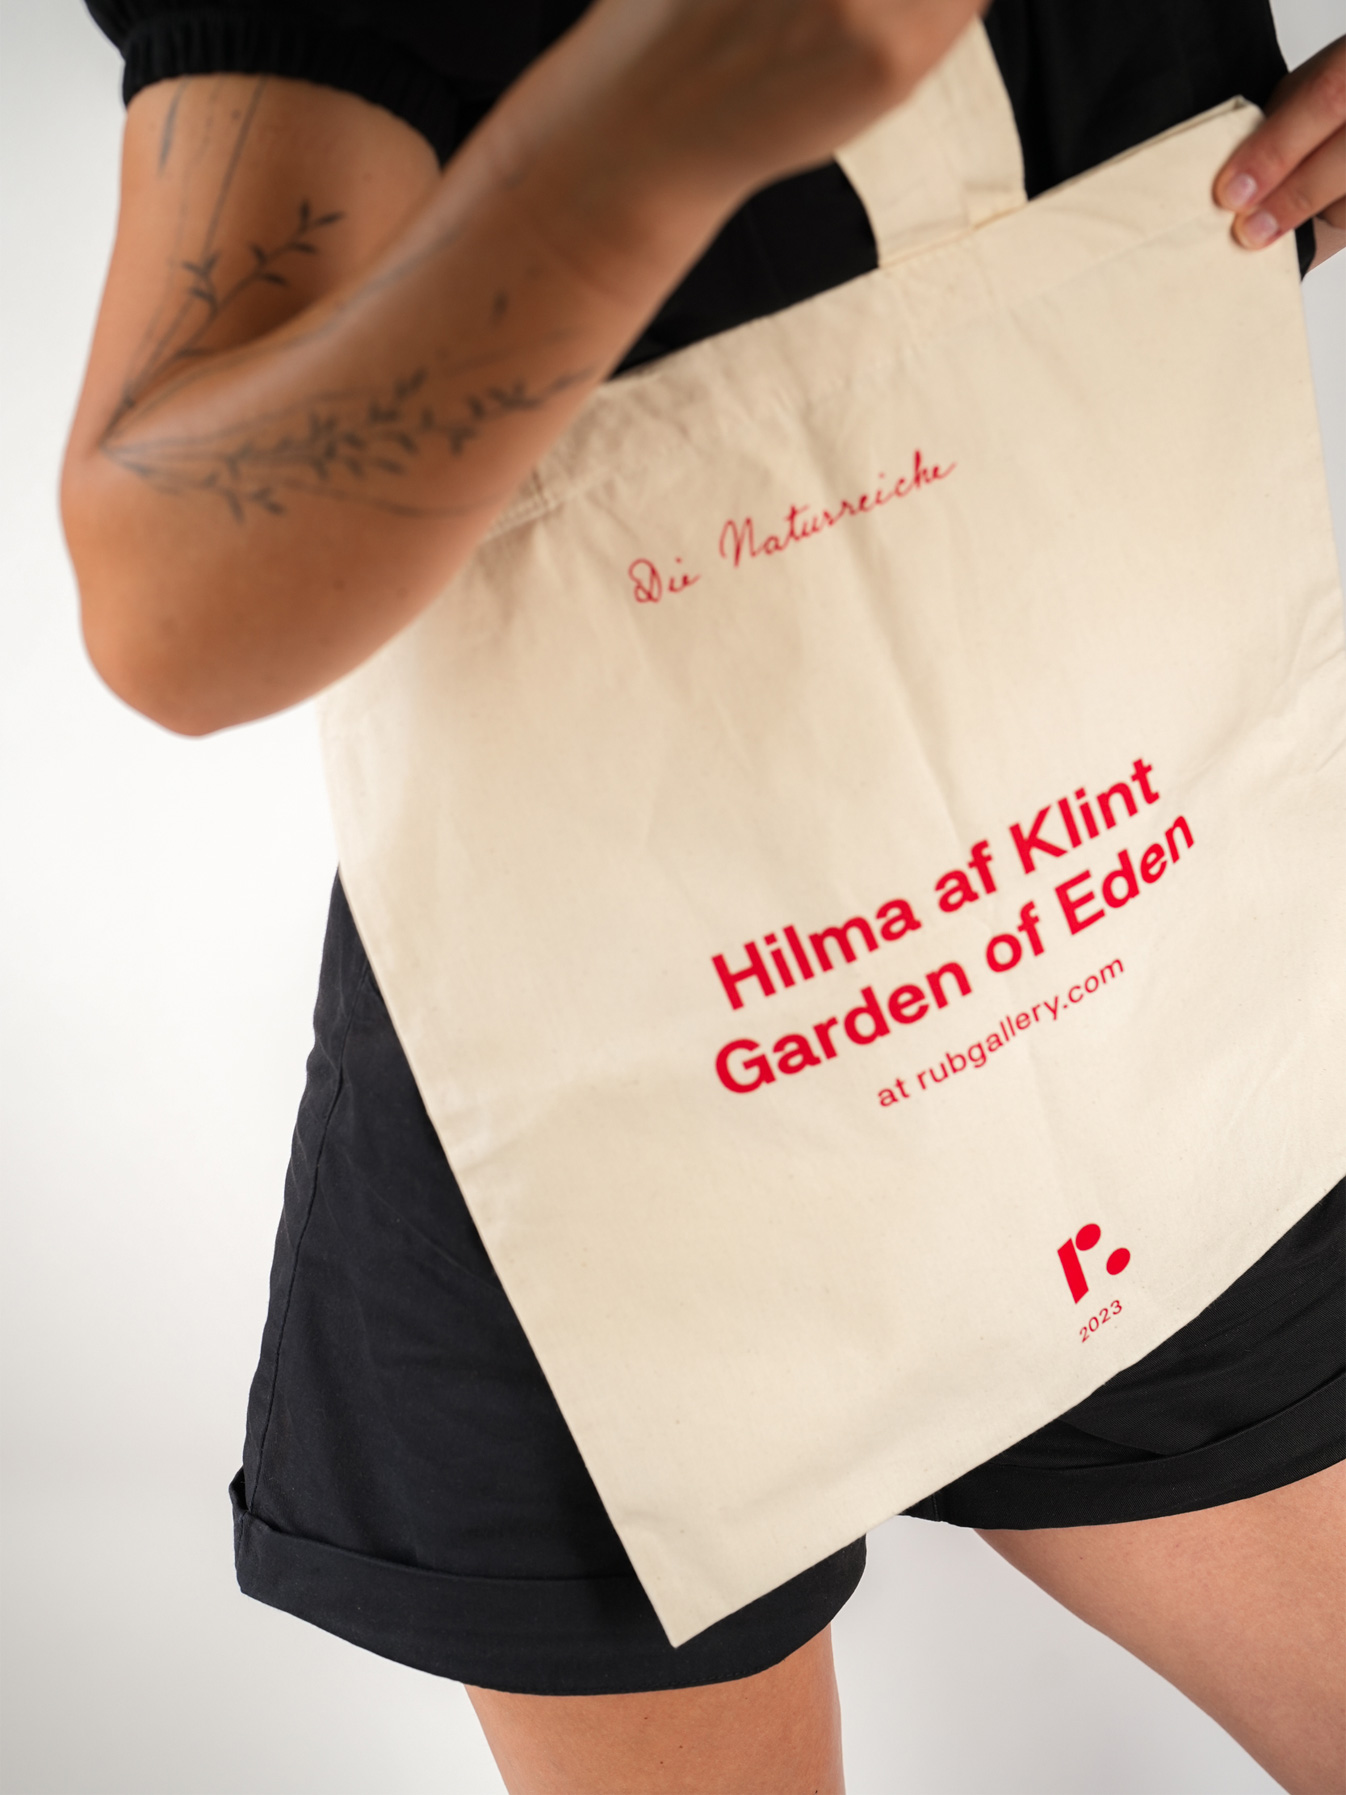 Hilma af Klint – Rub Gallery – Cotton bag Garden of Eden